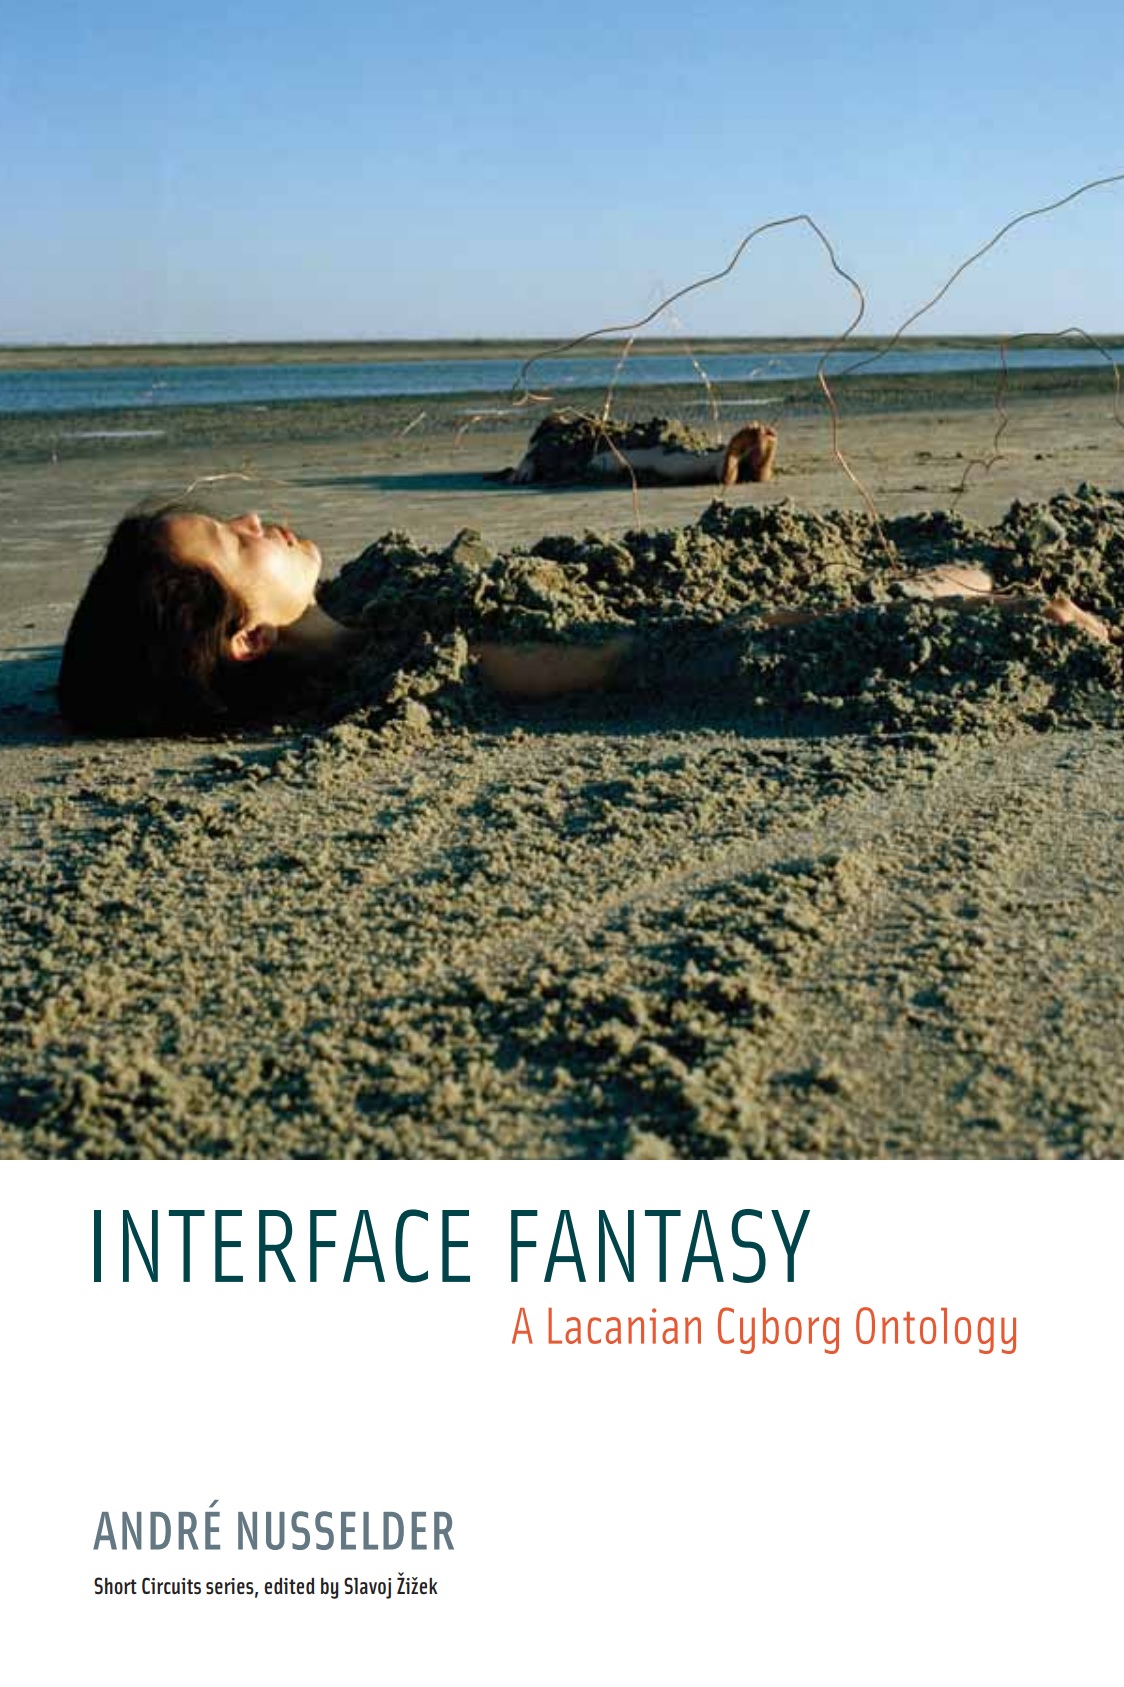 Interface-fantasy-a-lacanian-cyborg-ontology-andre-nusselder.jpg